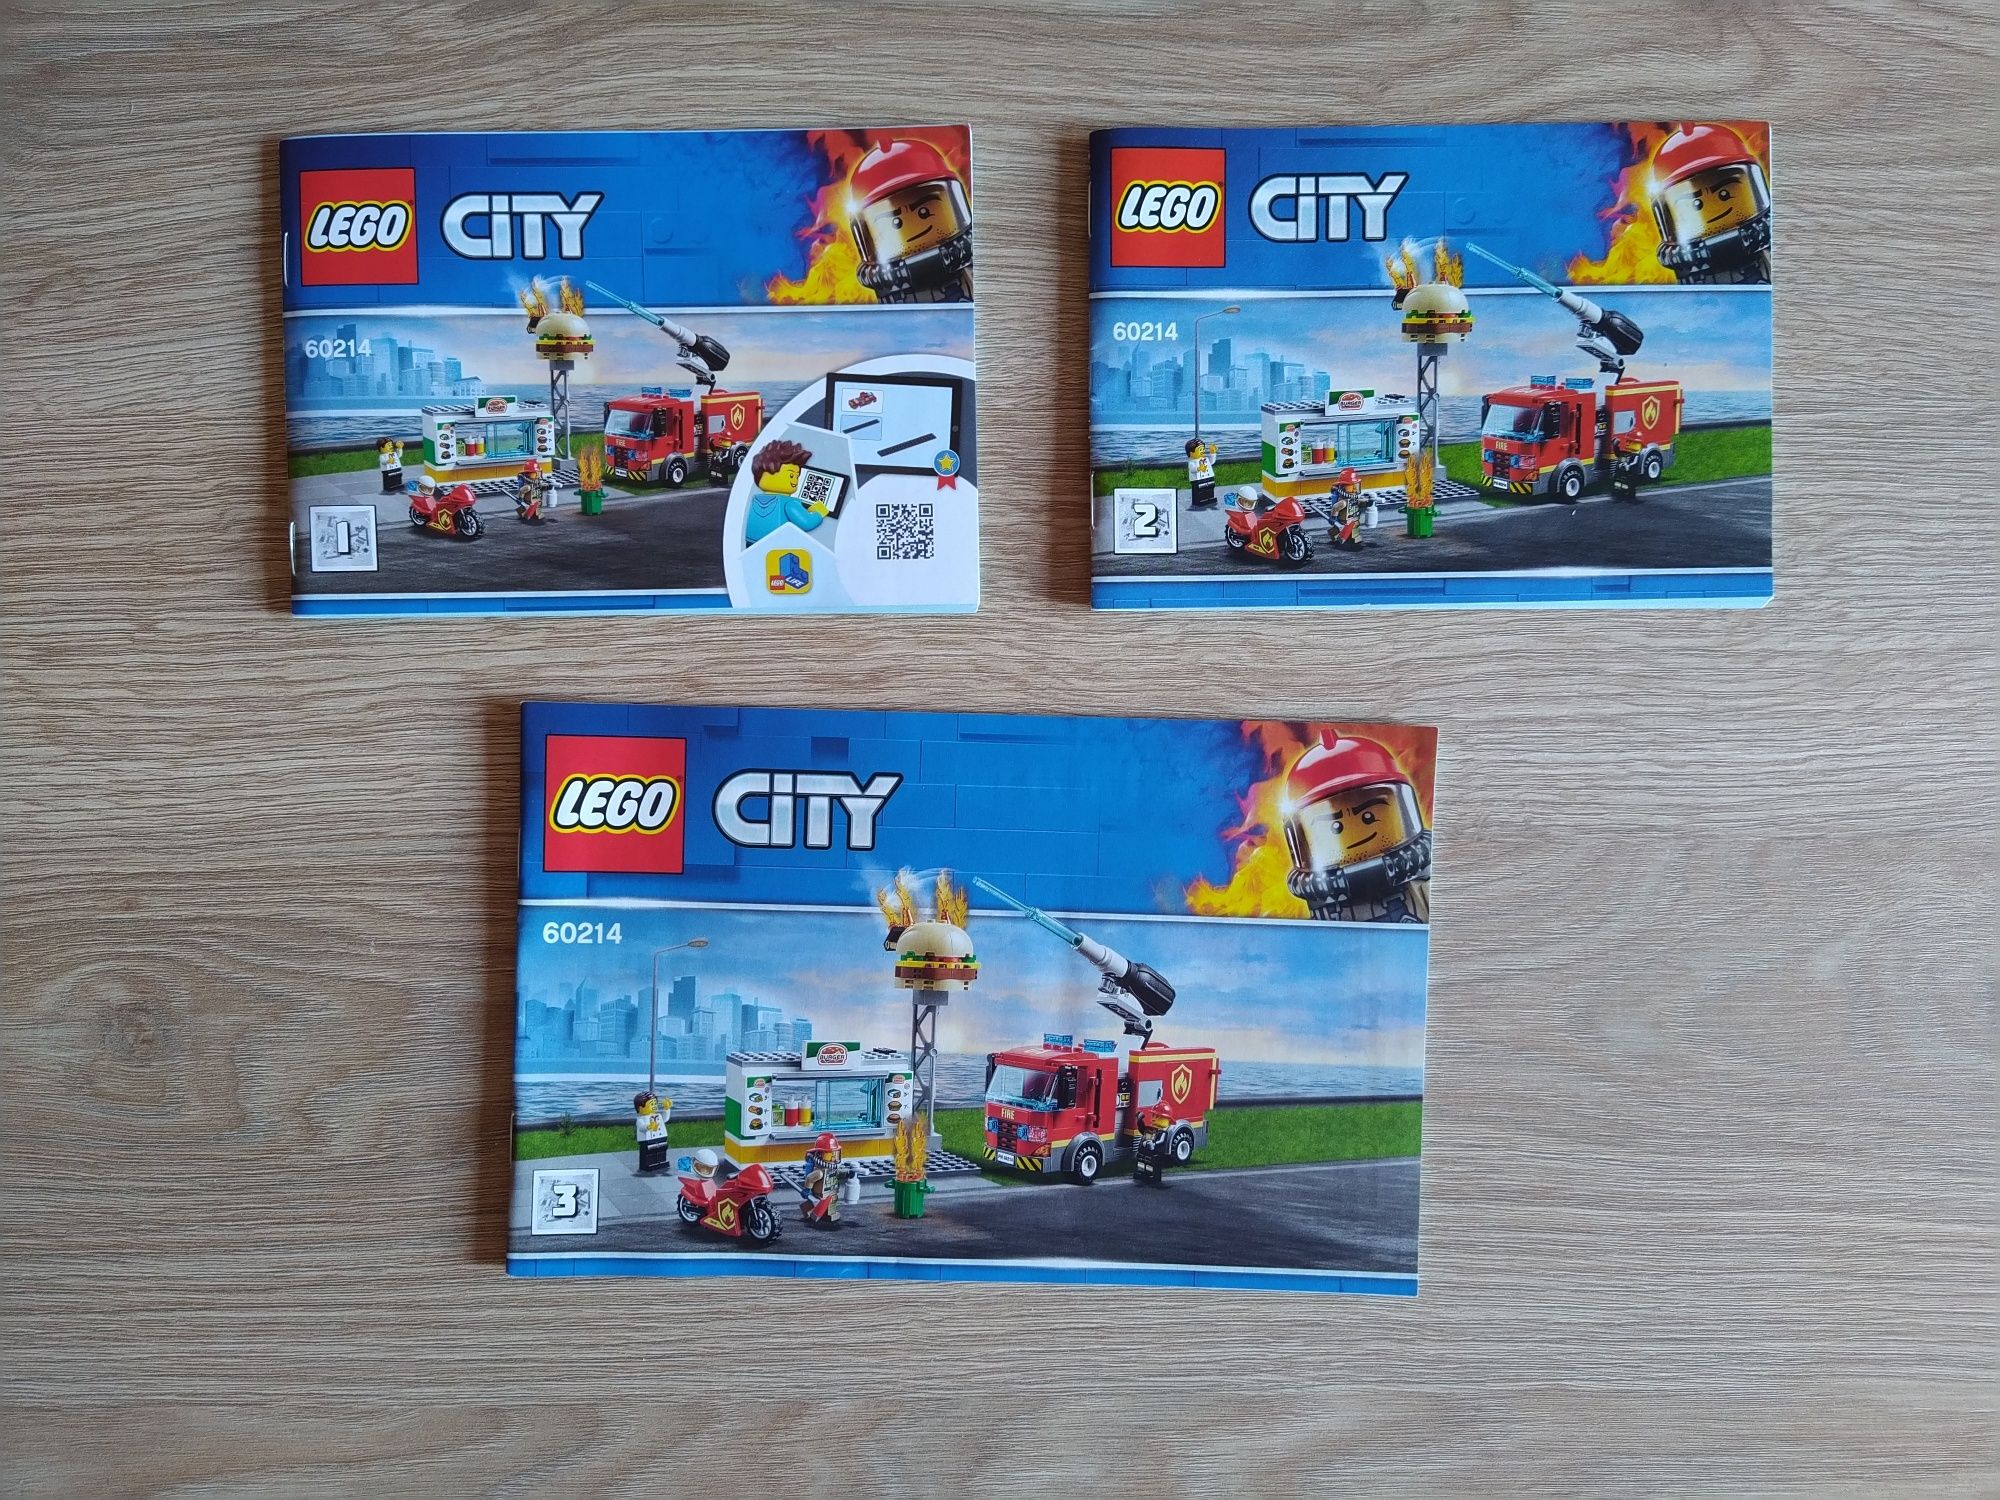 LEGO City: Combate ao Fogo no Bar de Hambúrgueres